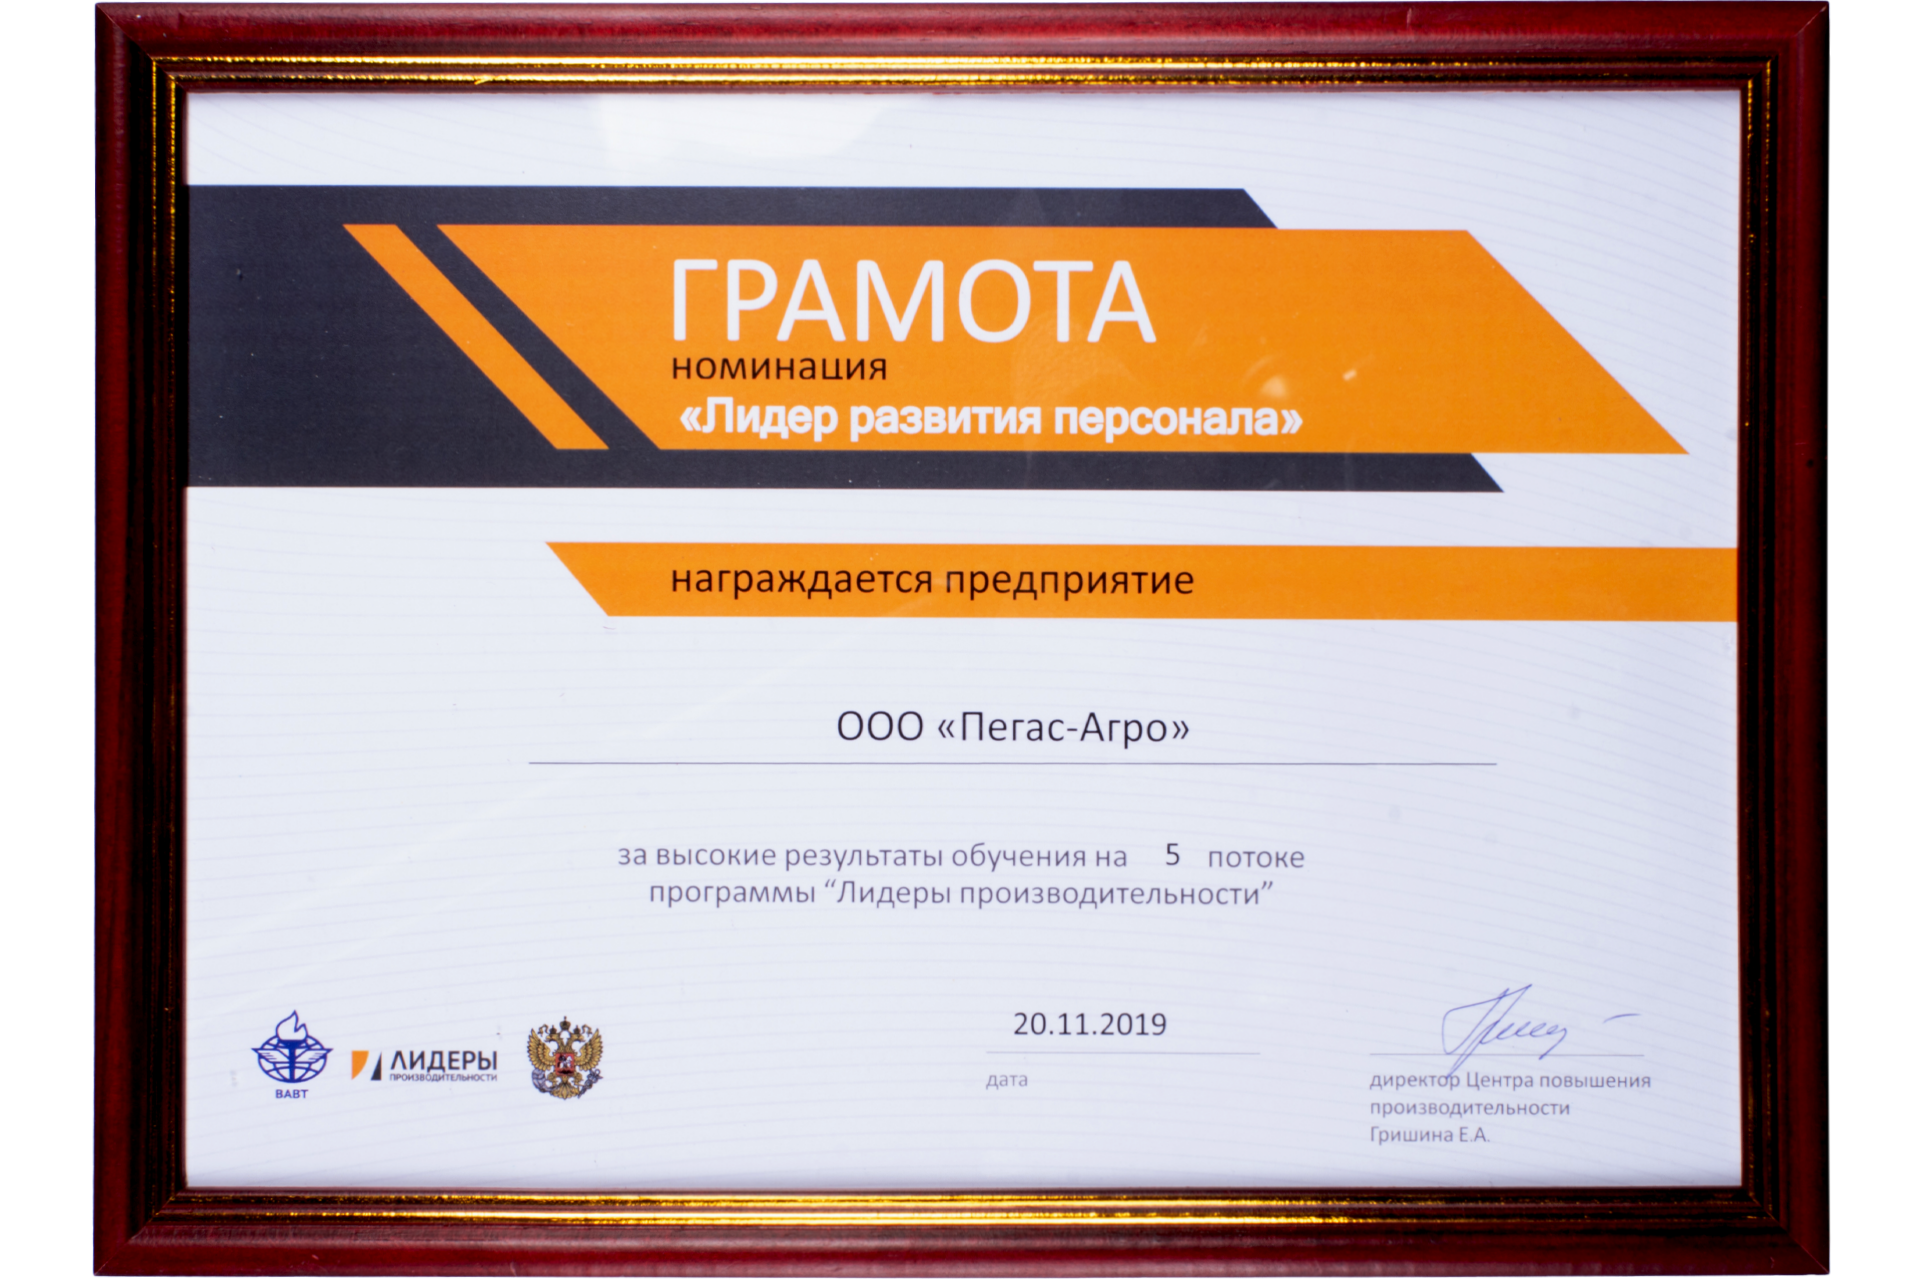 Diploma for “Leader of Personnel Development”, Center for Performance Improvement